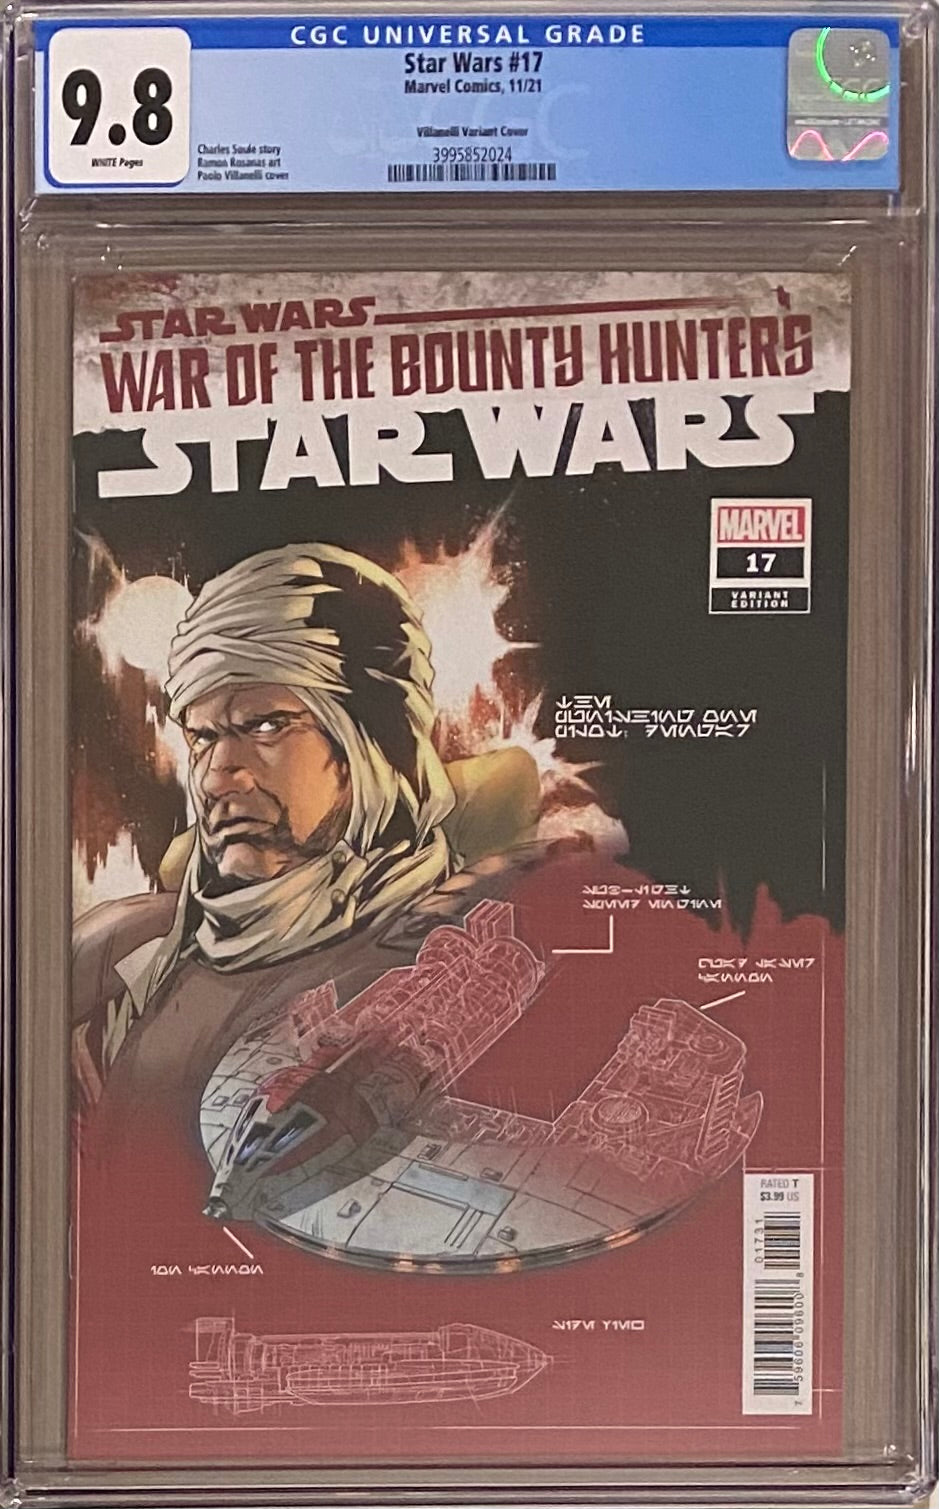 Star Wars #17 Blueprint Variant CGC 9.8 - War of the Bounty Hunters